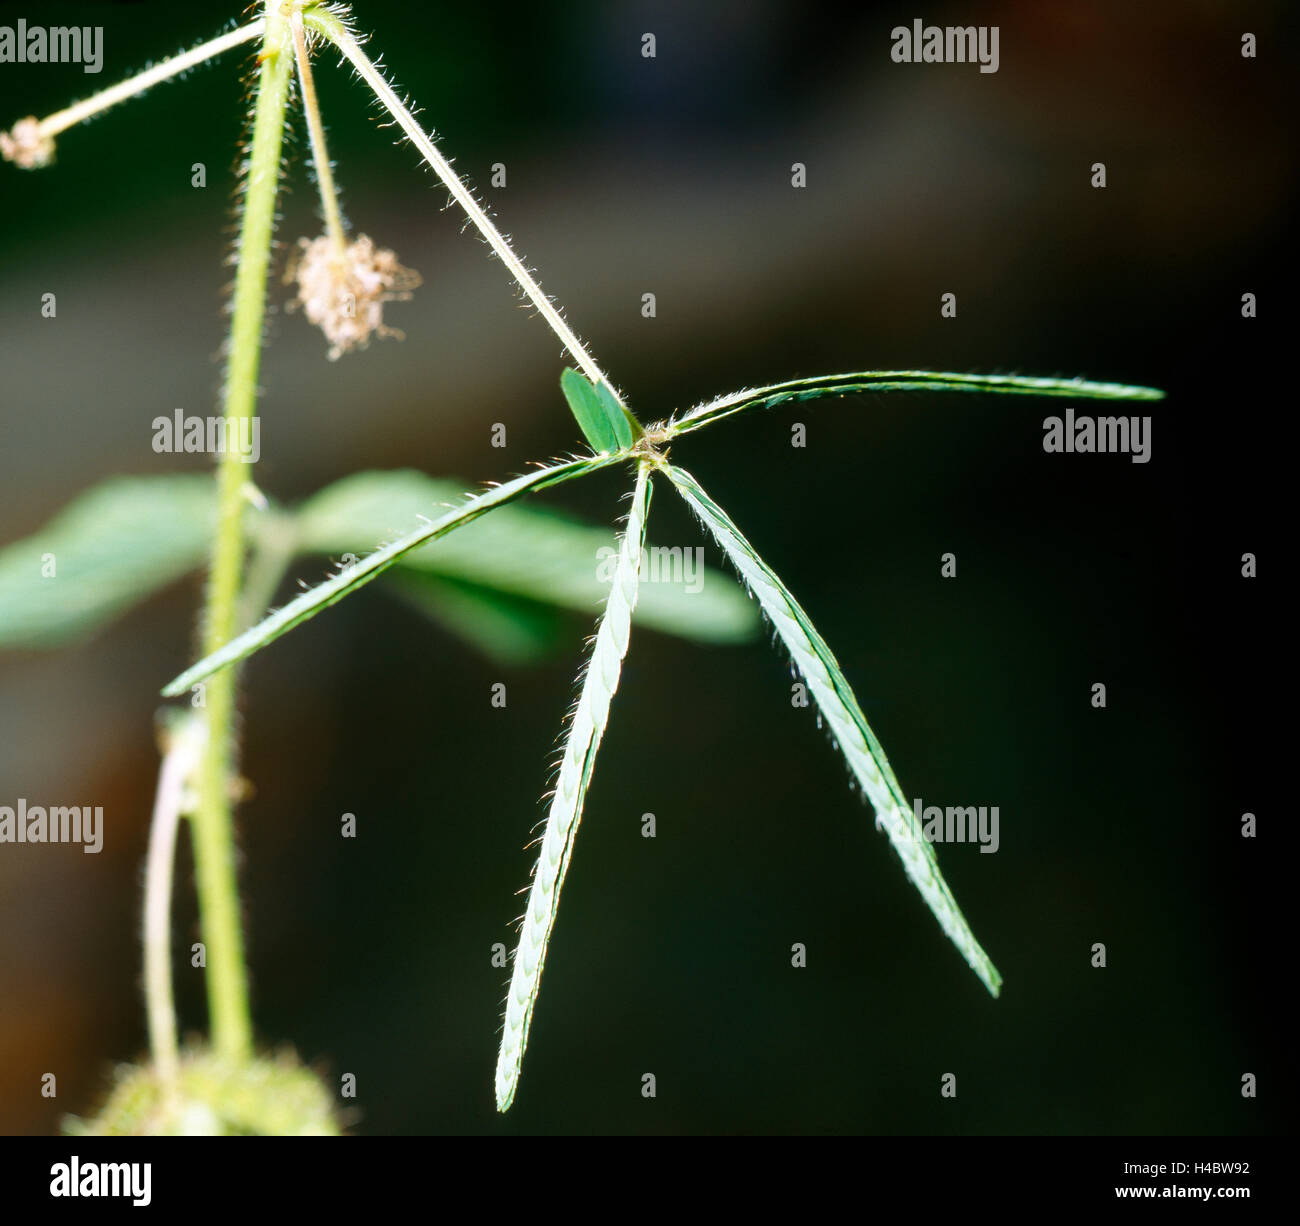 Sinnpflanze, Mimose, mechanische Reizung, Blattstiele, Rhachis, Ohrmuschel, umgeklappt Stockfoto